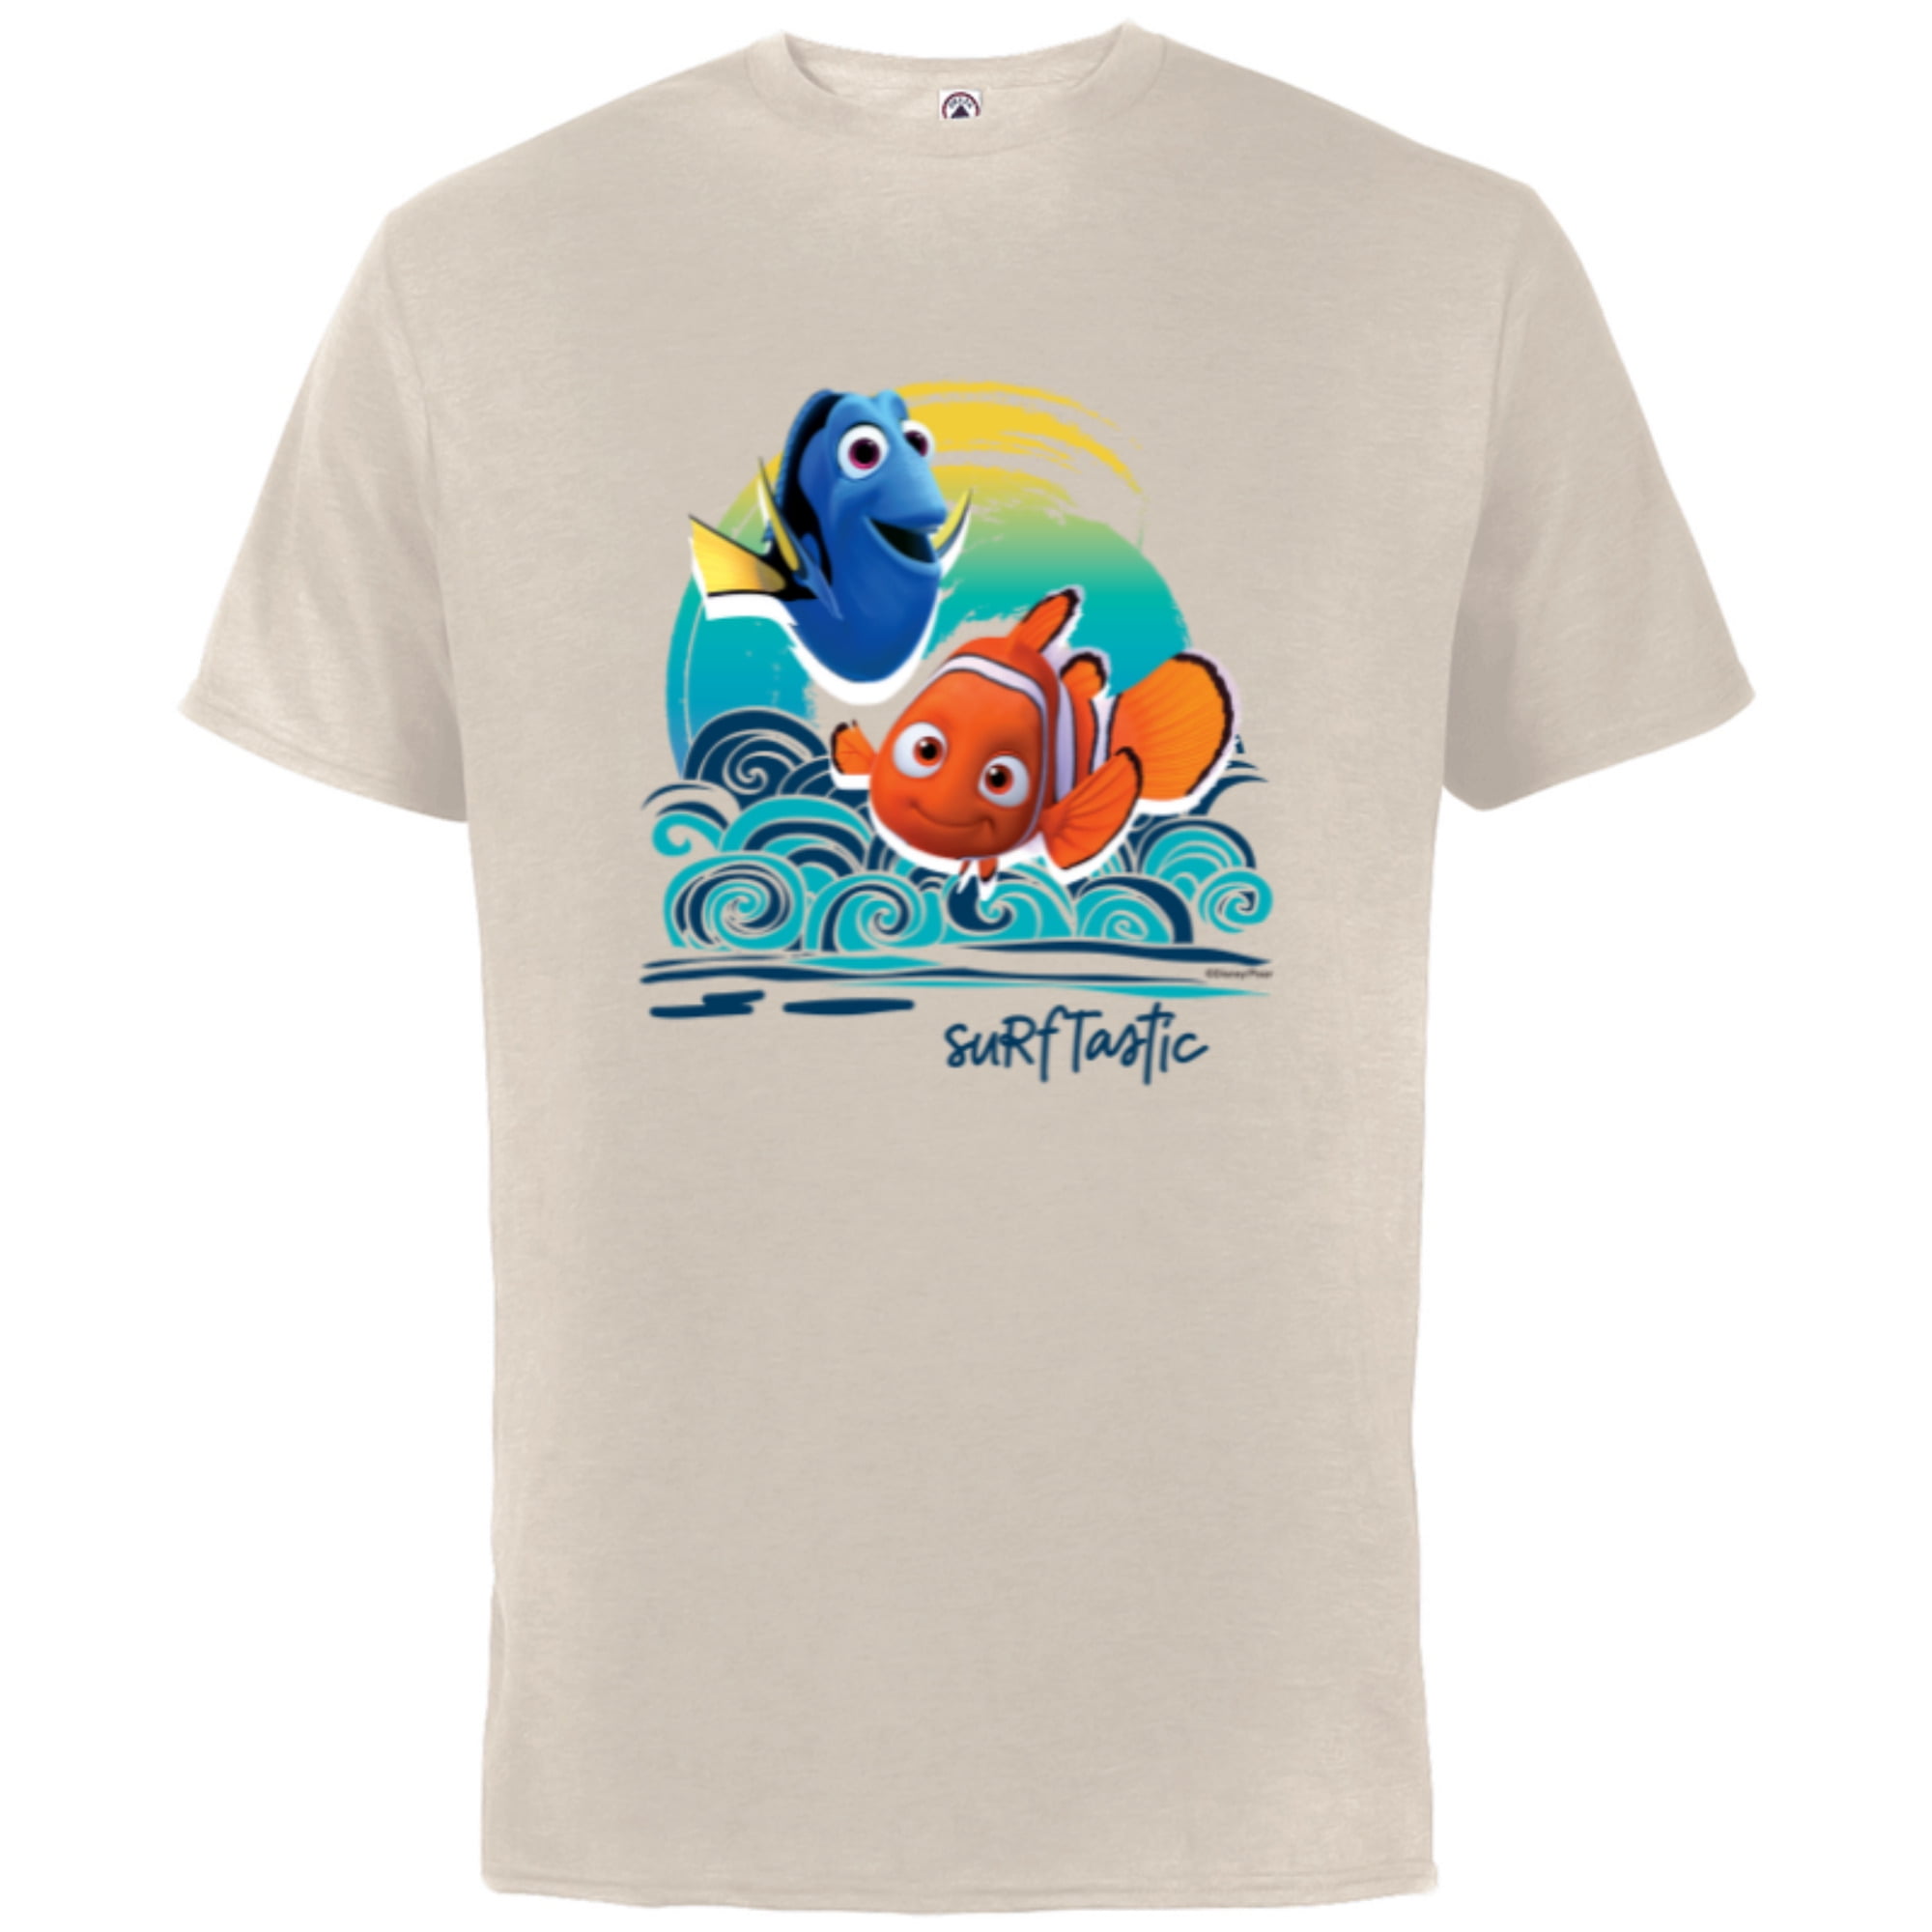 Finding Nemo Shirt, Mine T-shirt, Disney Couple Shirt, Seagulls Shirt,  Finding Dory Shirt, Disney Gifts, Disney Plus Size Shirts for Women 